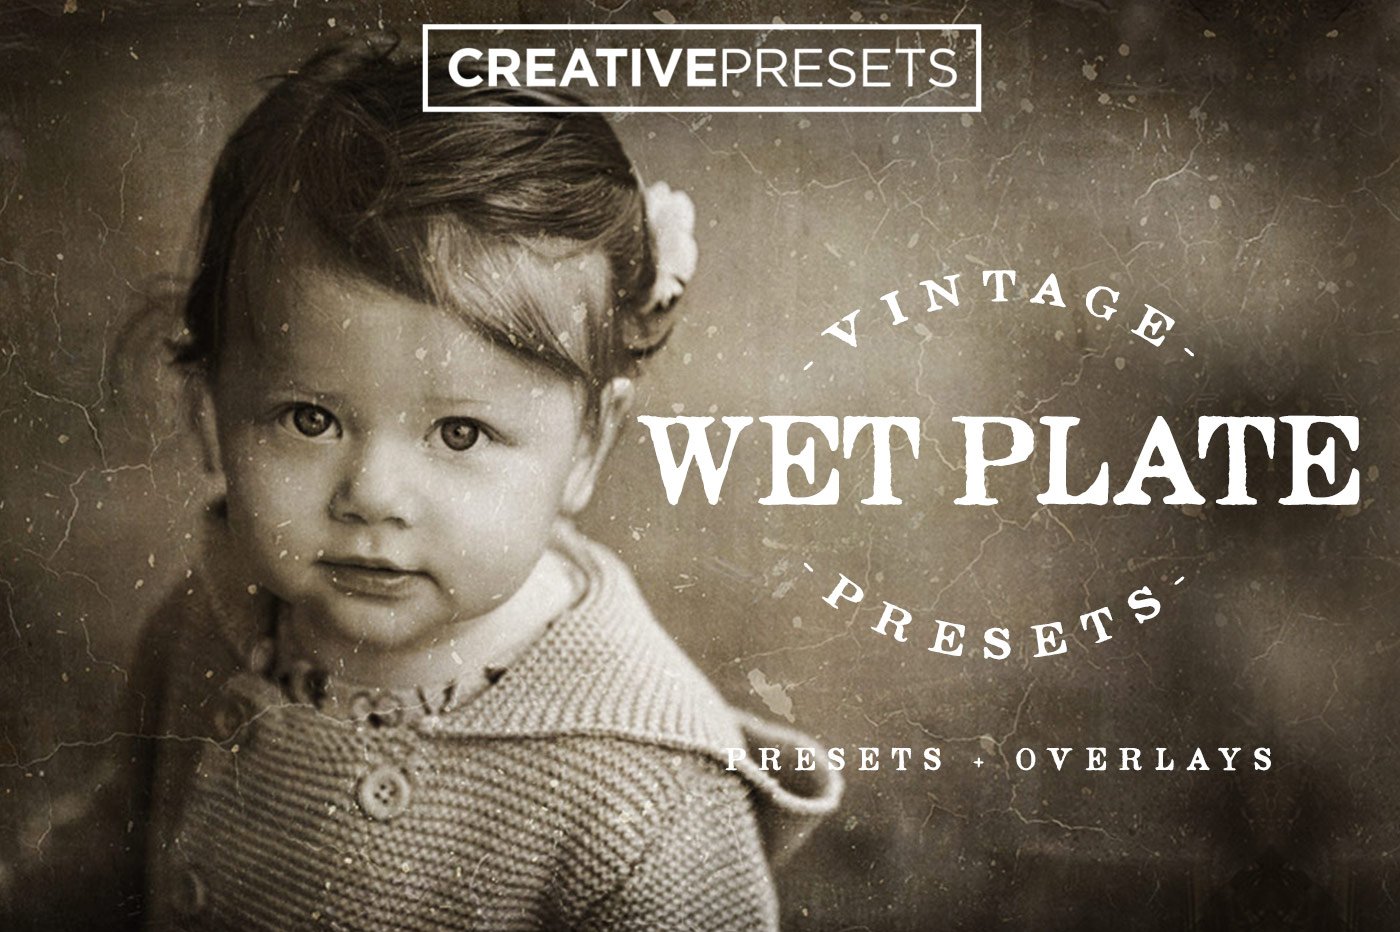 Wet Plate Lightroom Presets+Overlaycover image.